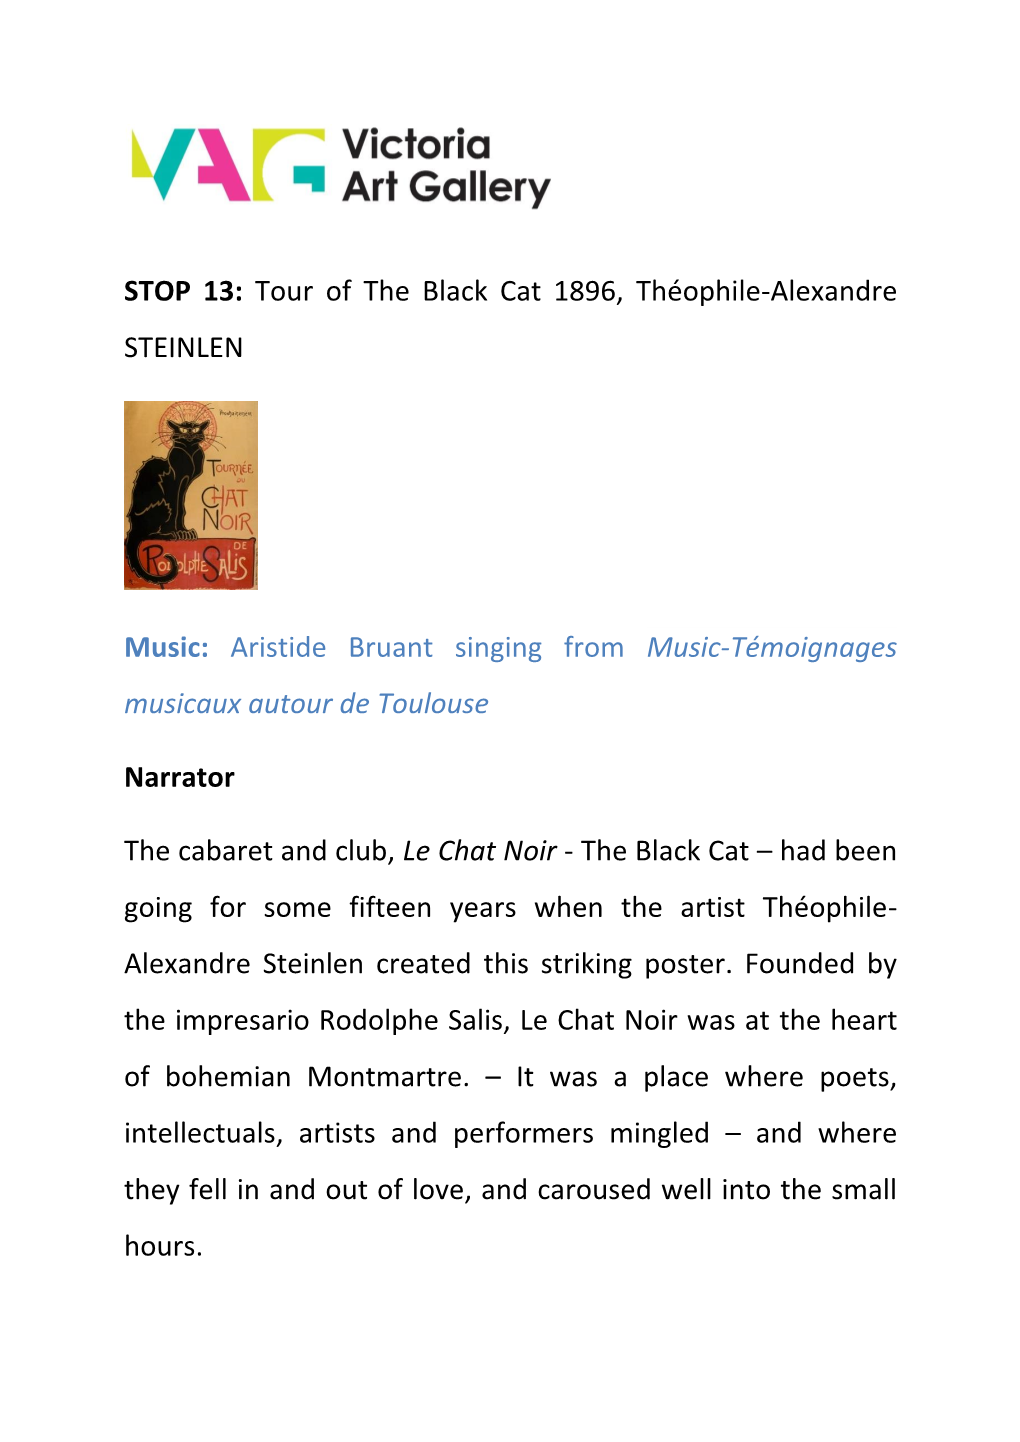 STOP 13: Tour of the Black Cat 1896, Théophile-Alexandre STEINLEN